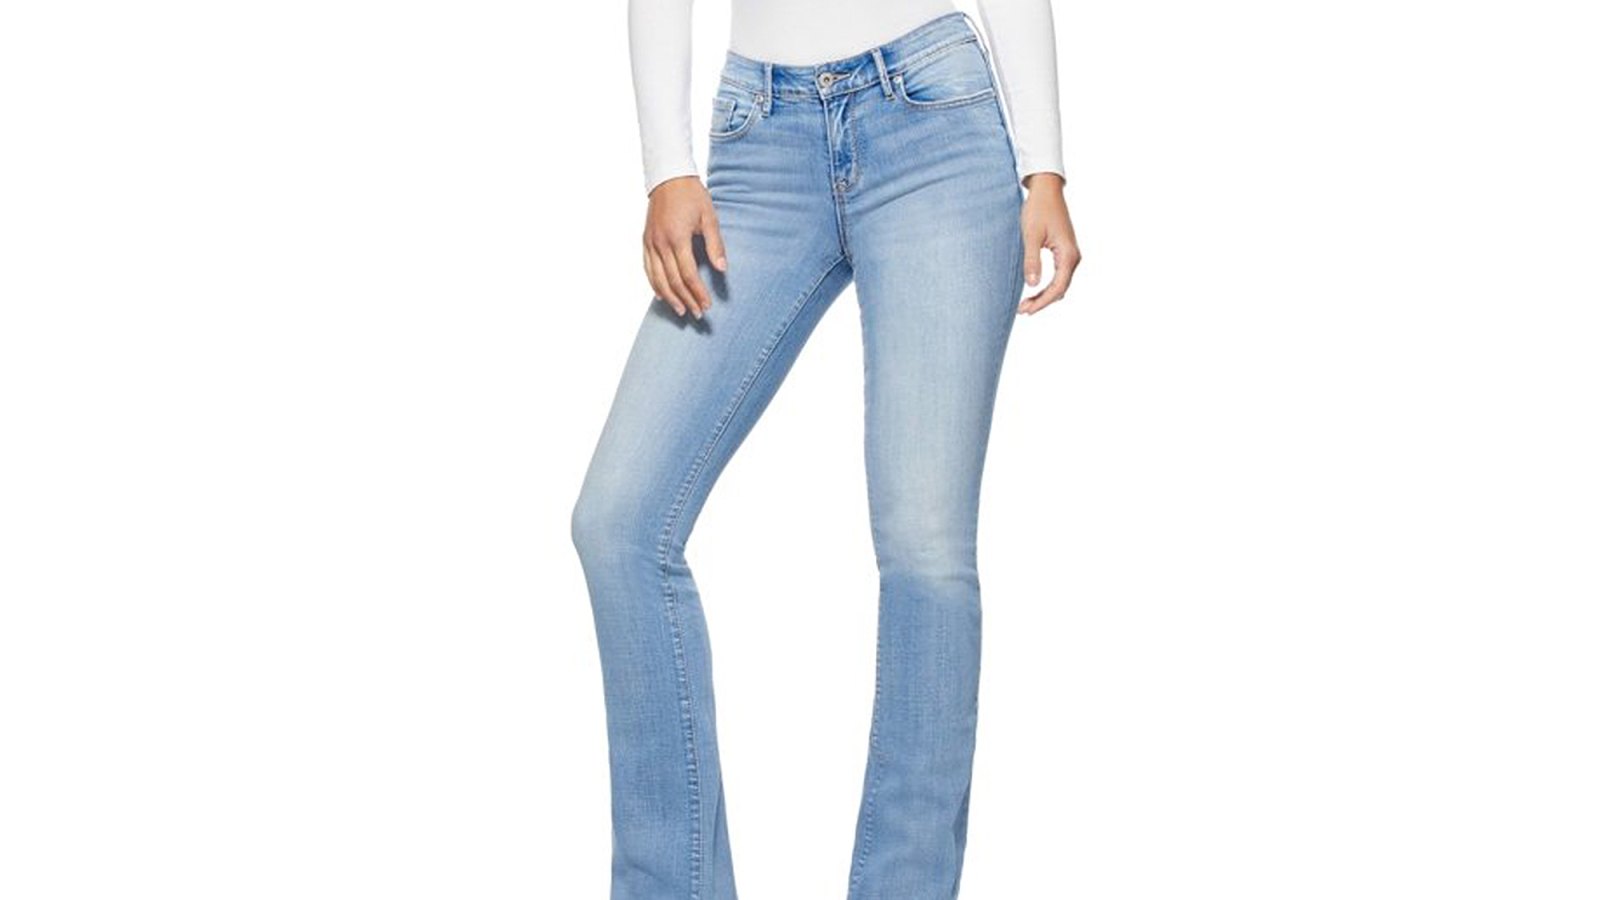 sofia vergara jeans - Google Search  Sofia vergara style, Everyday  outfits, Fashion